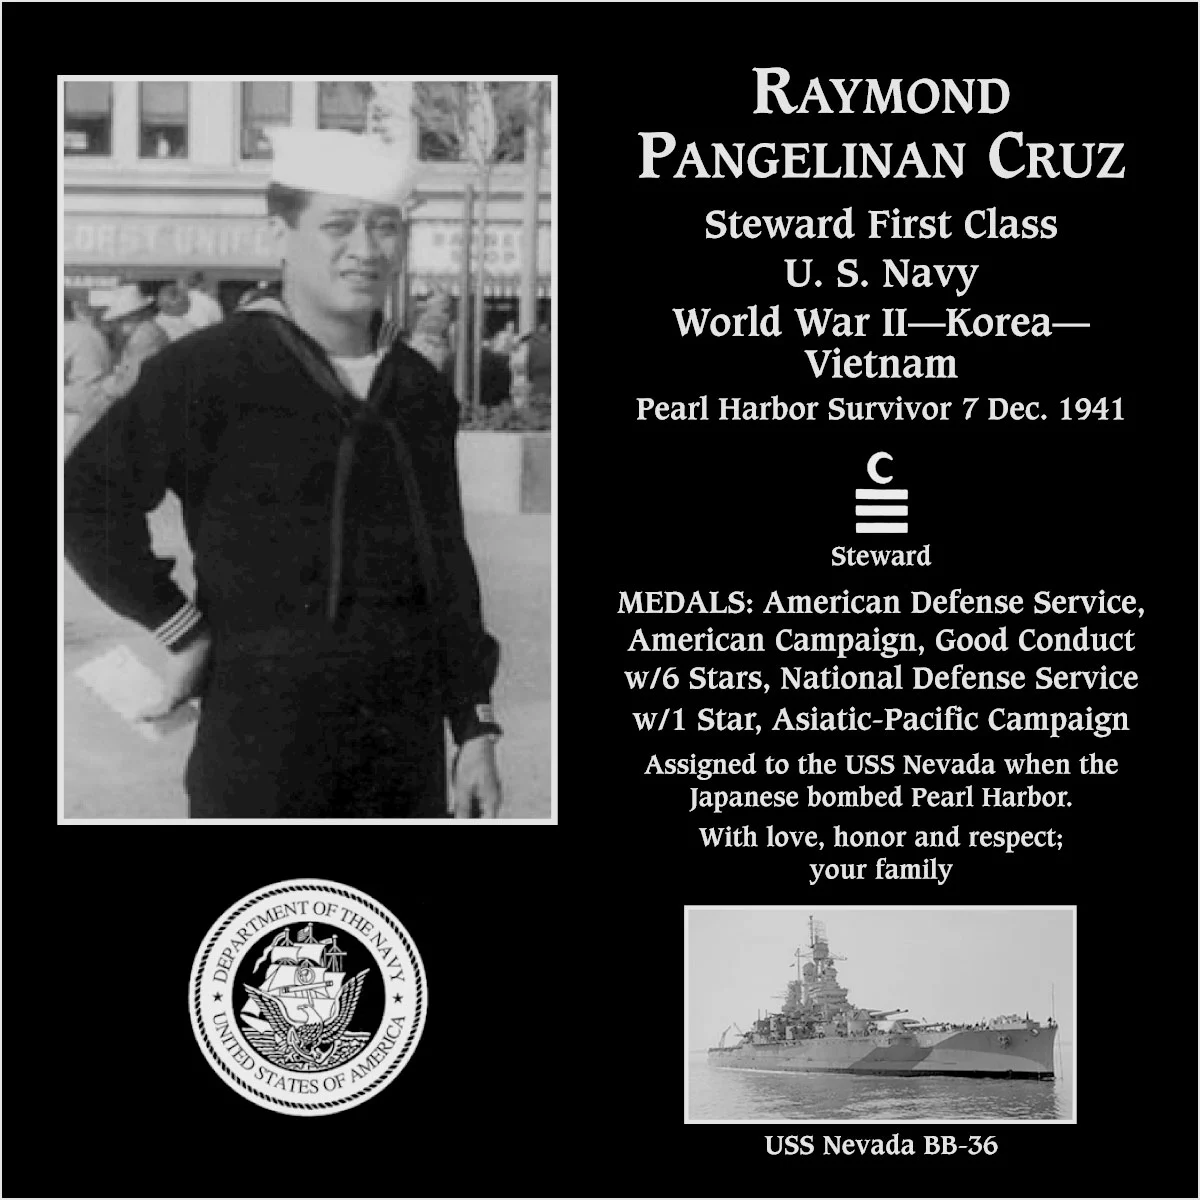 Raymond Pangelinan Cruz